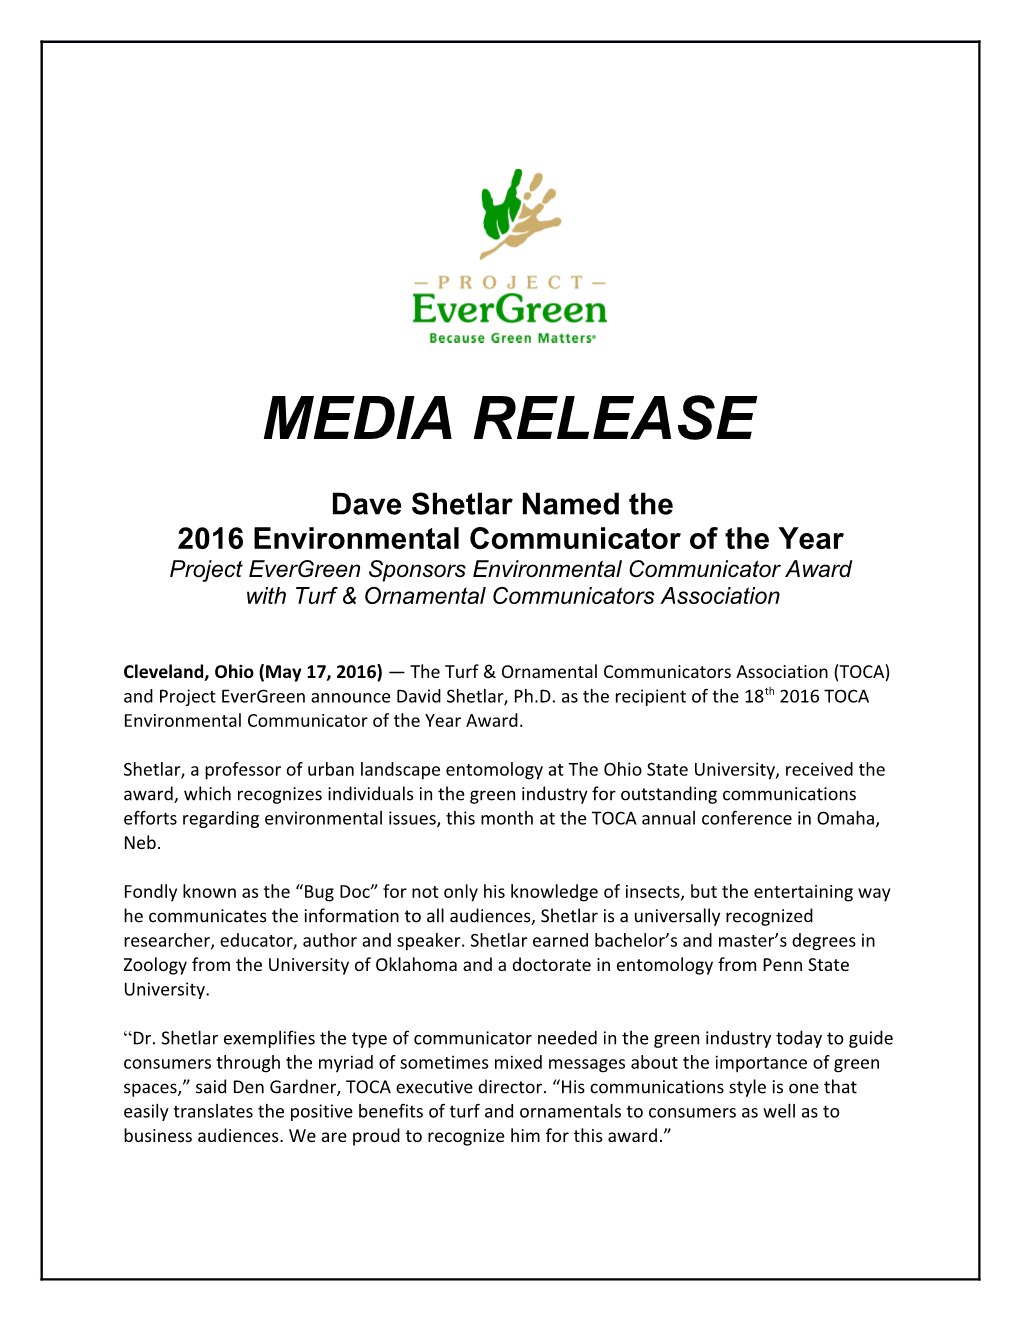 Dave Shetlar Named the 2016 Environmental Communicator of the Year